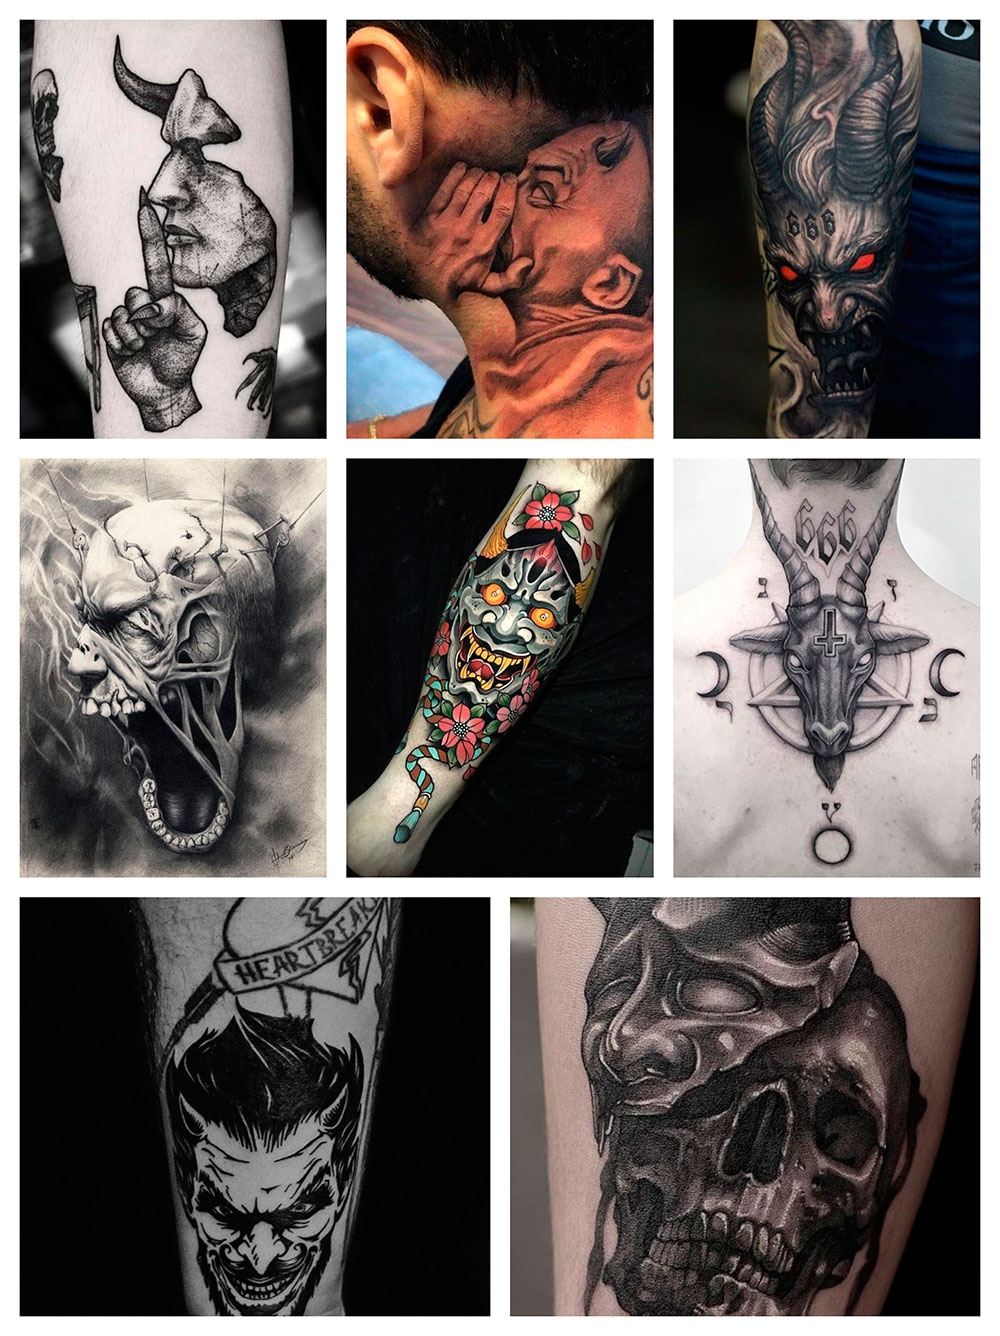 Tatuaje de diablo significado